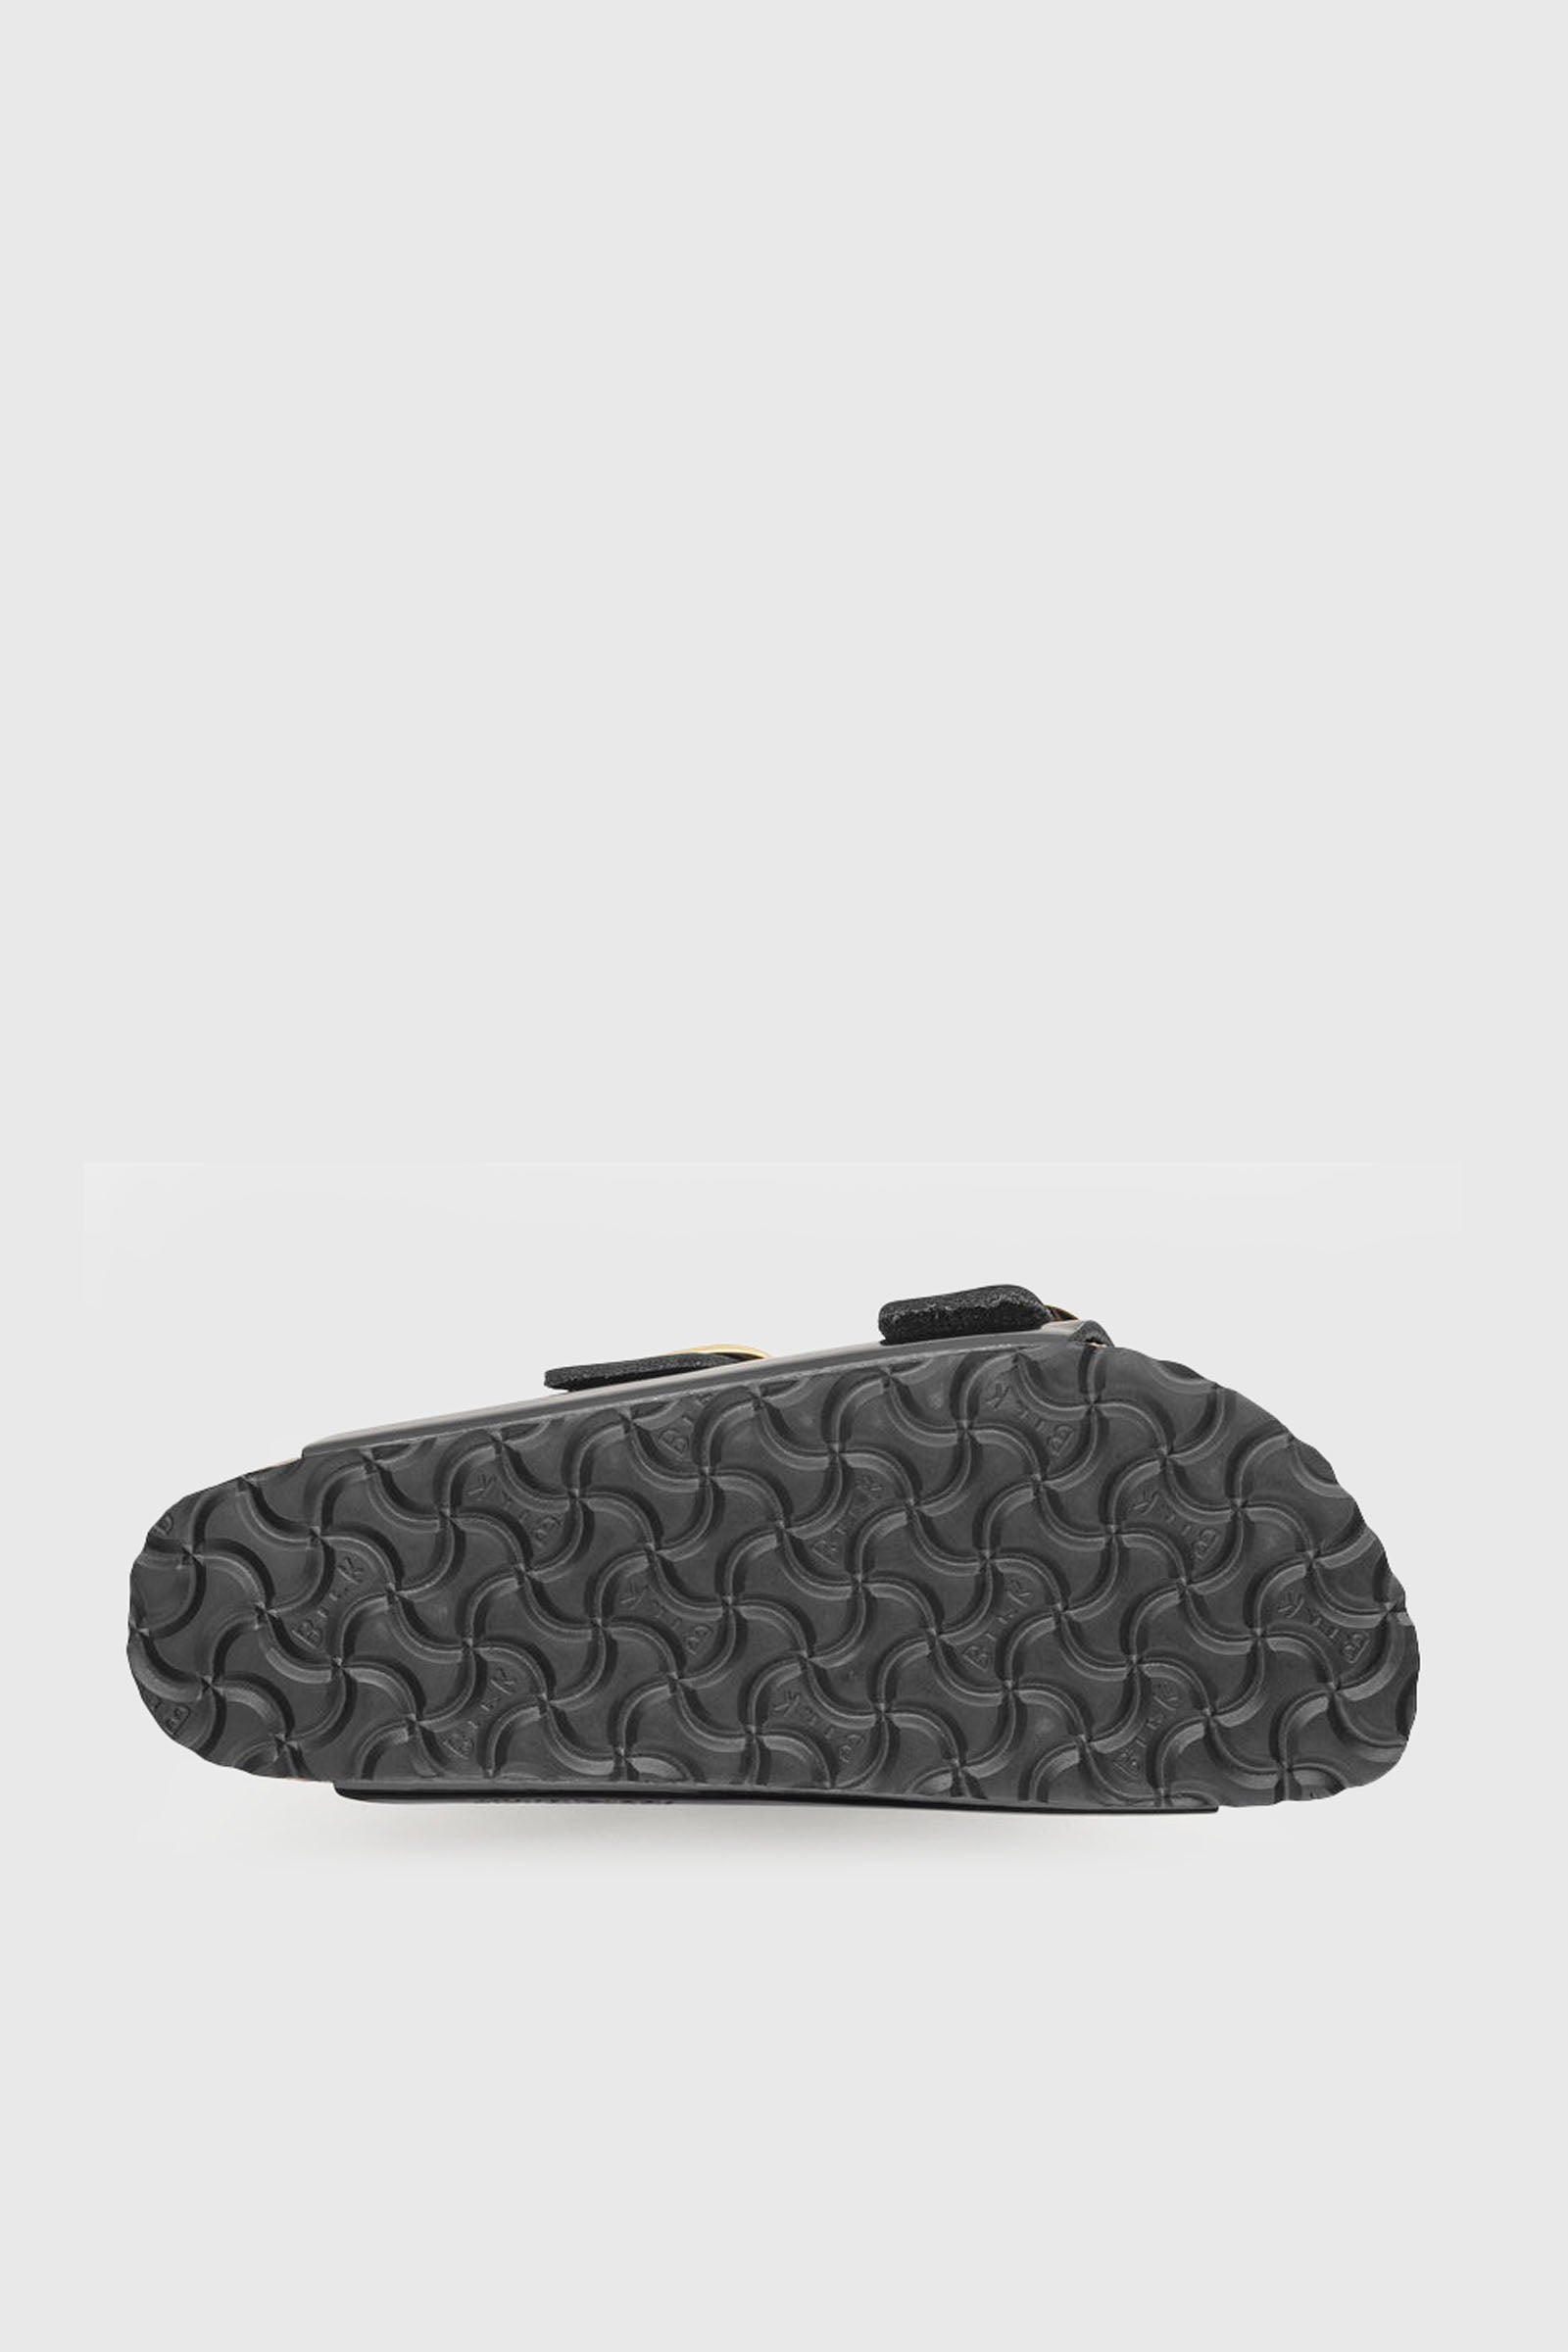 Birkenstock Arizona Leather Sandal Black - 6